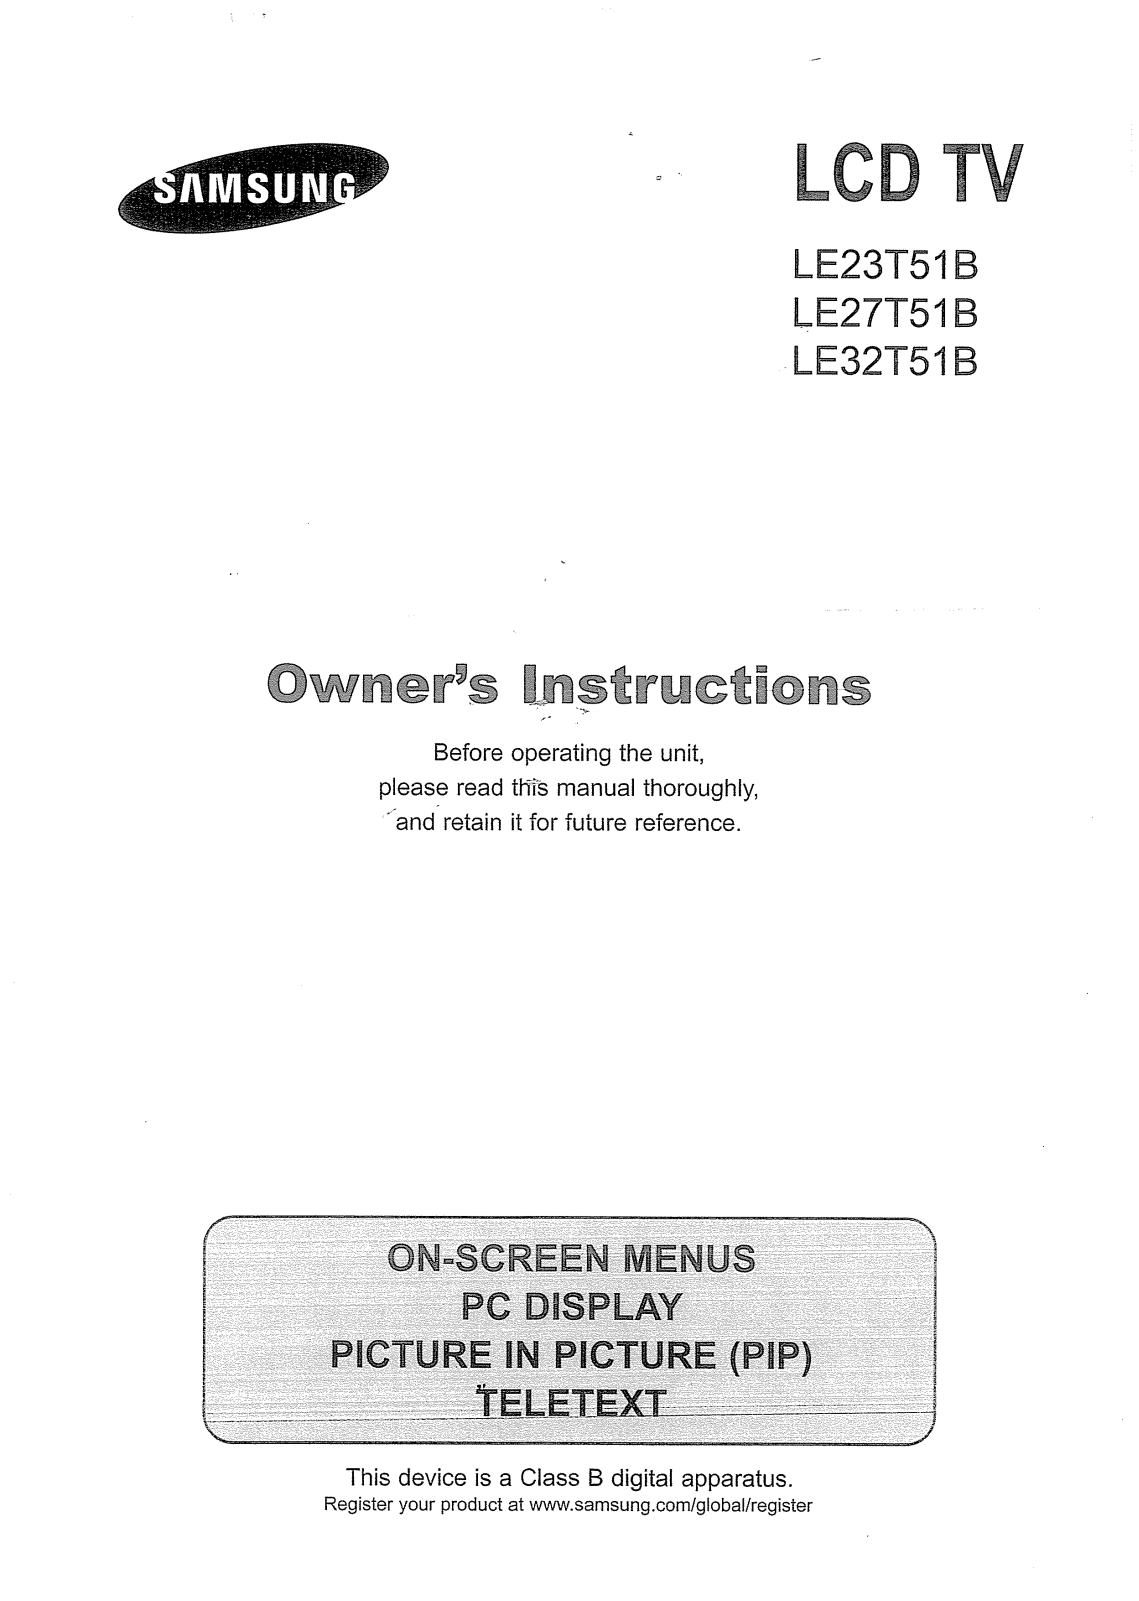 Samsung LE-27T51B User Manual